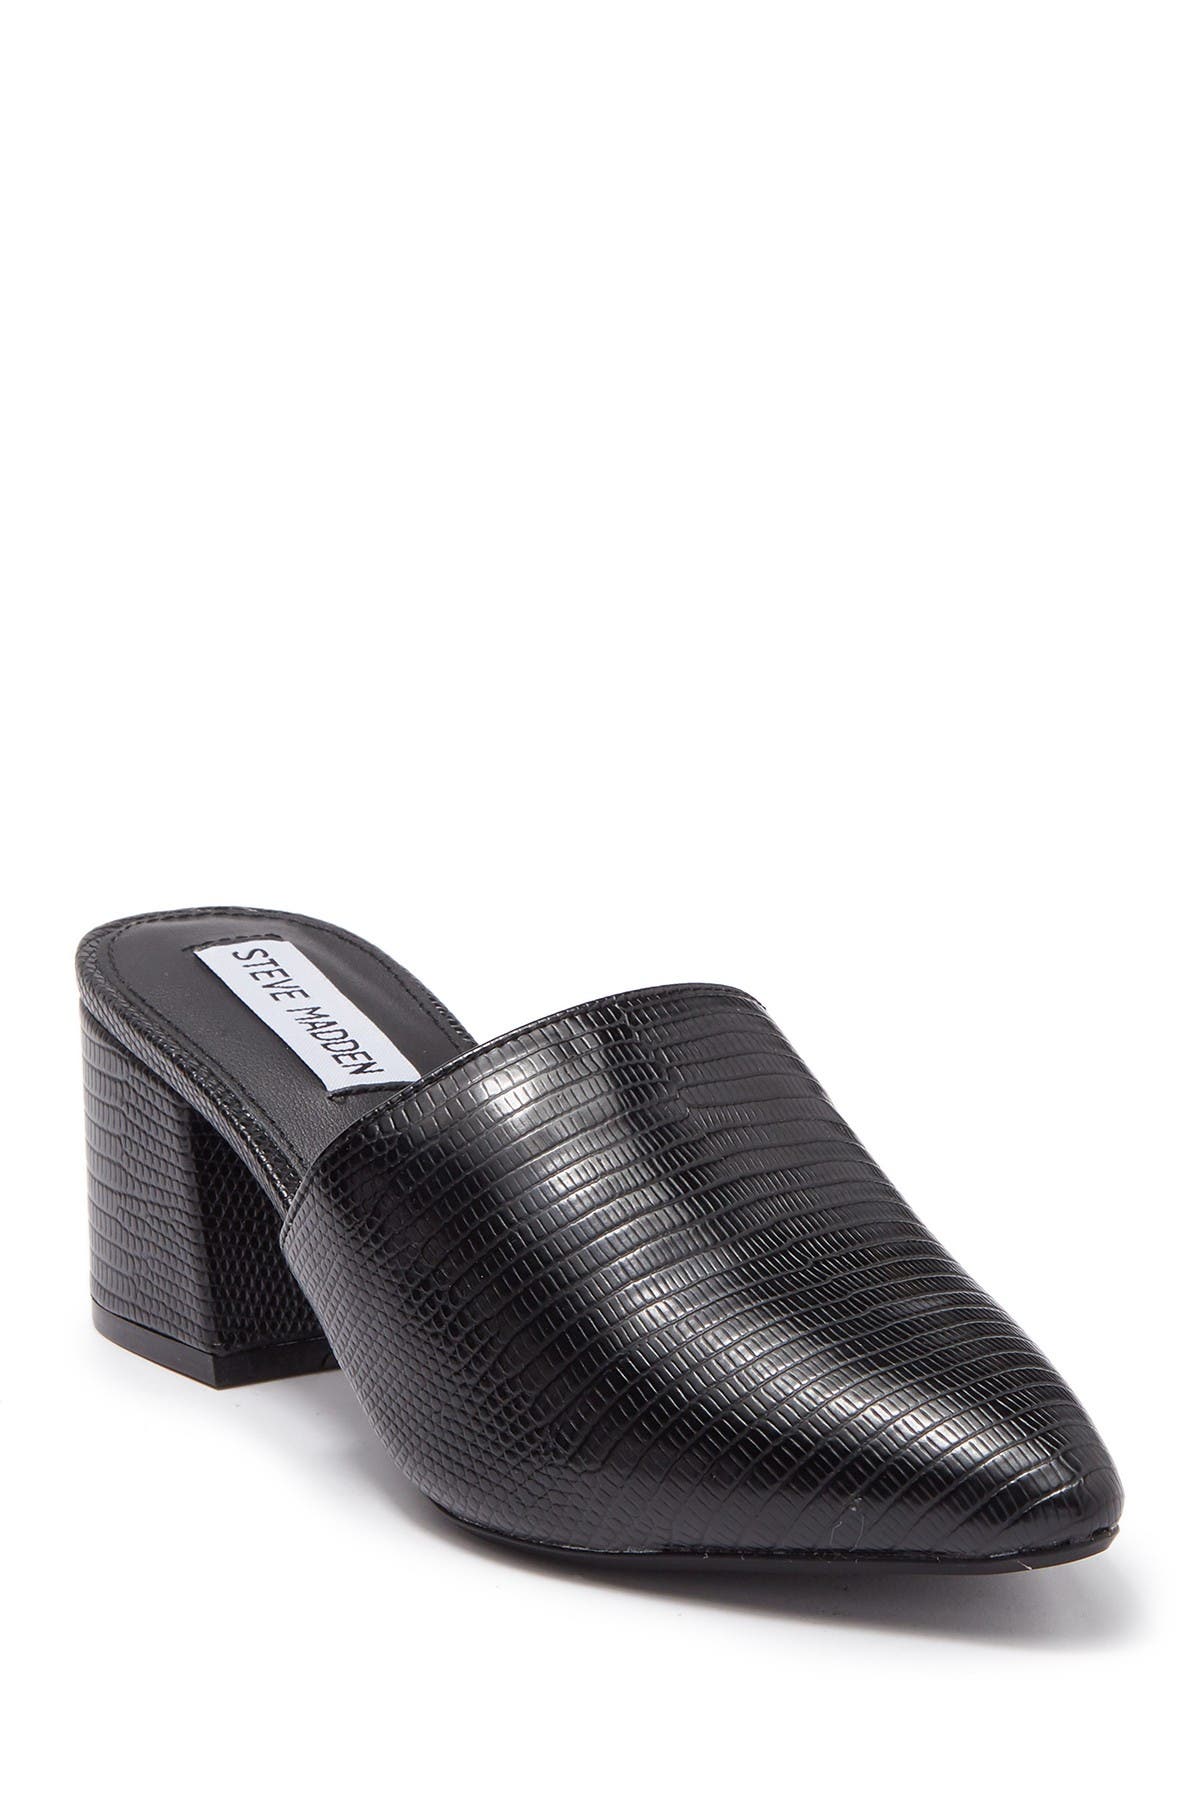 black mules with block heel